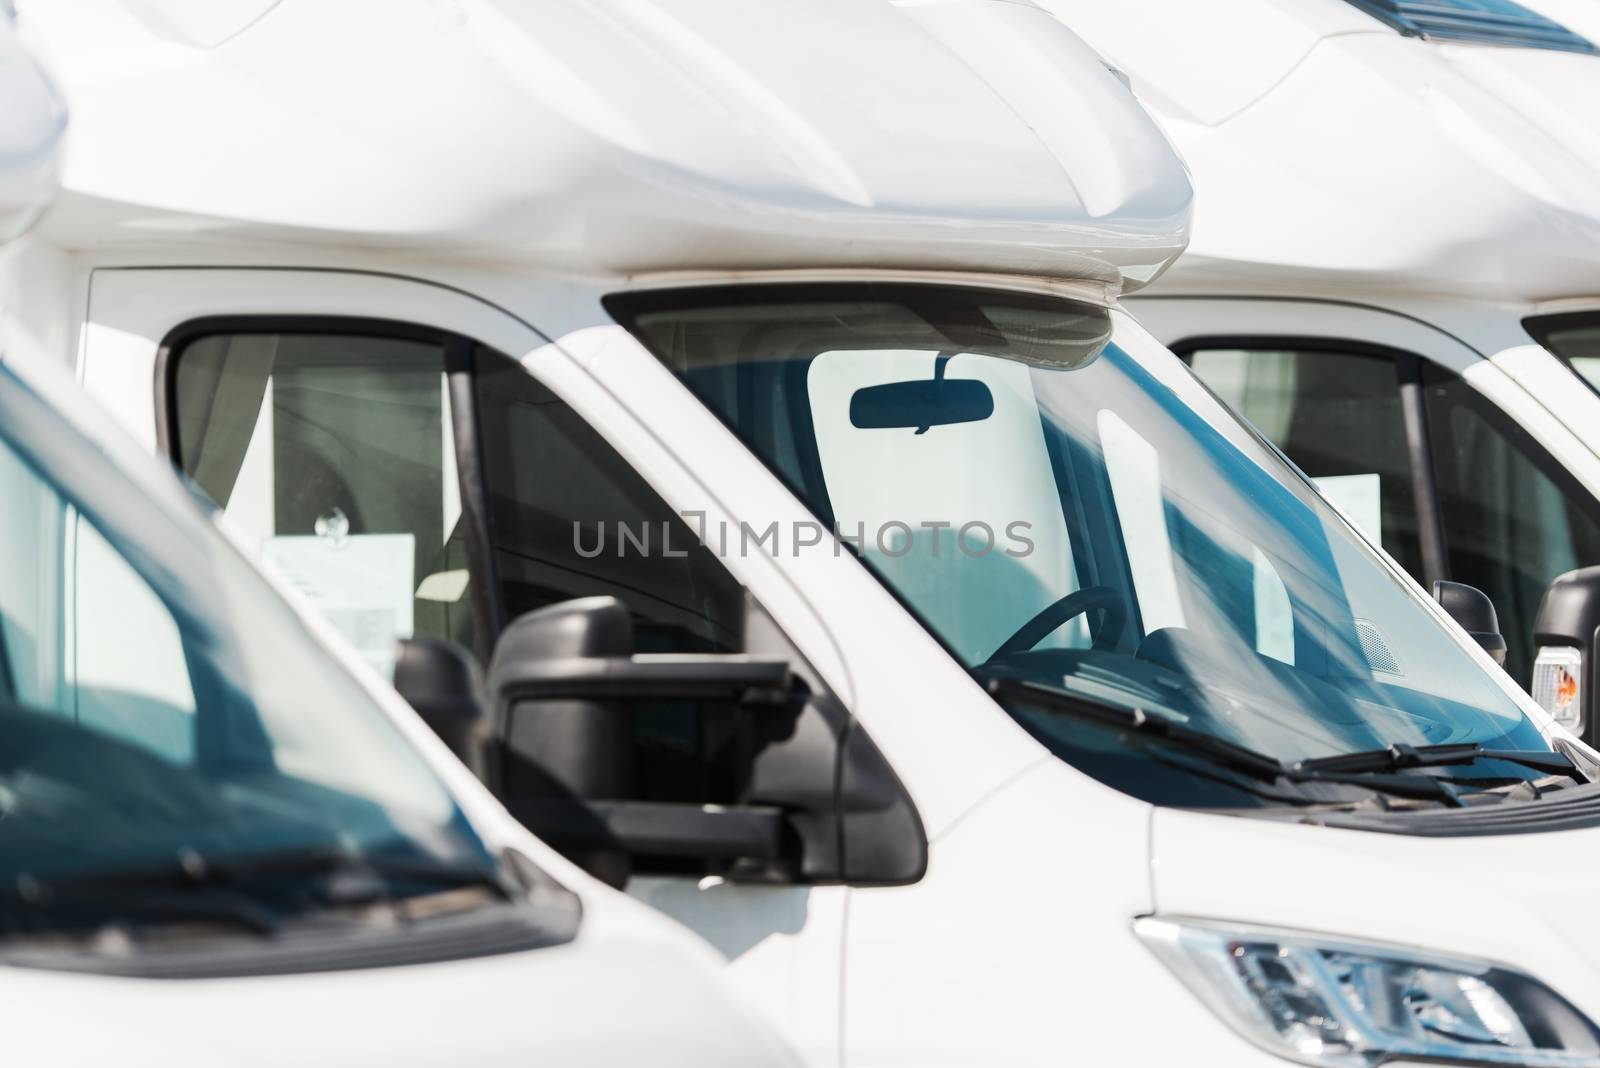 Camper Vans in Stock. Motor Coaches RV Dealer Theme. Travel Industry.